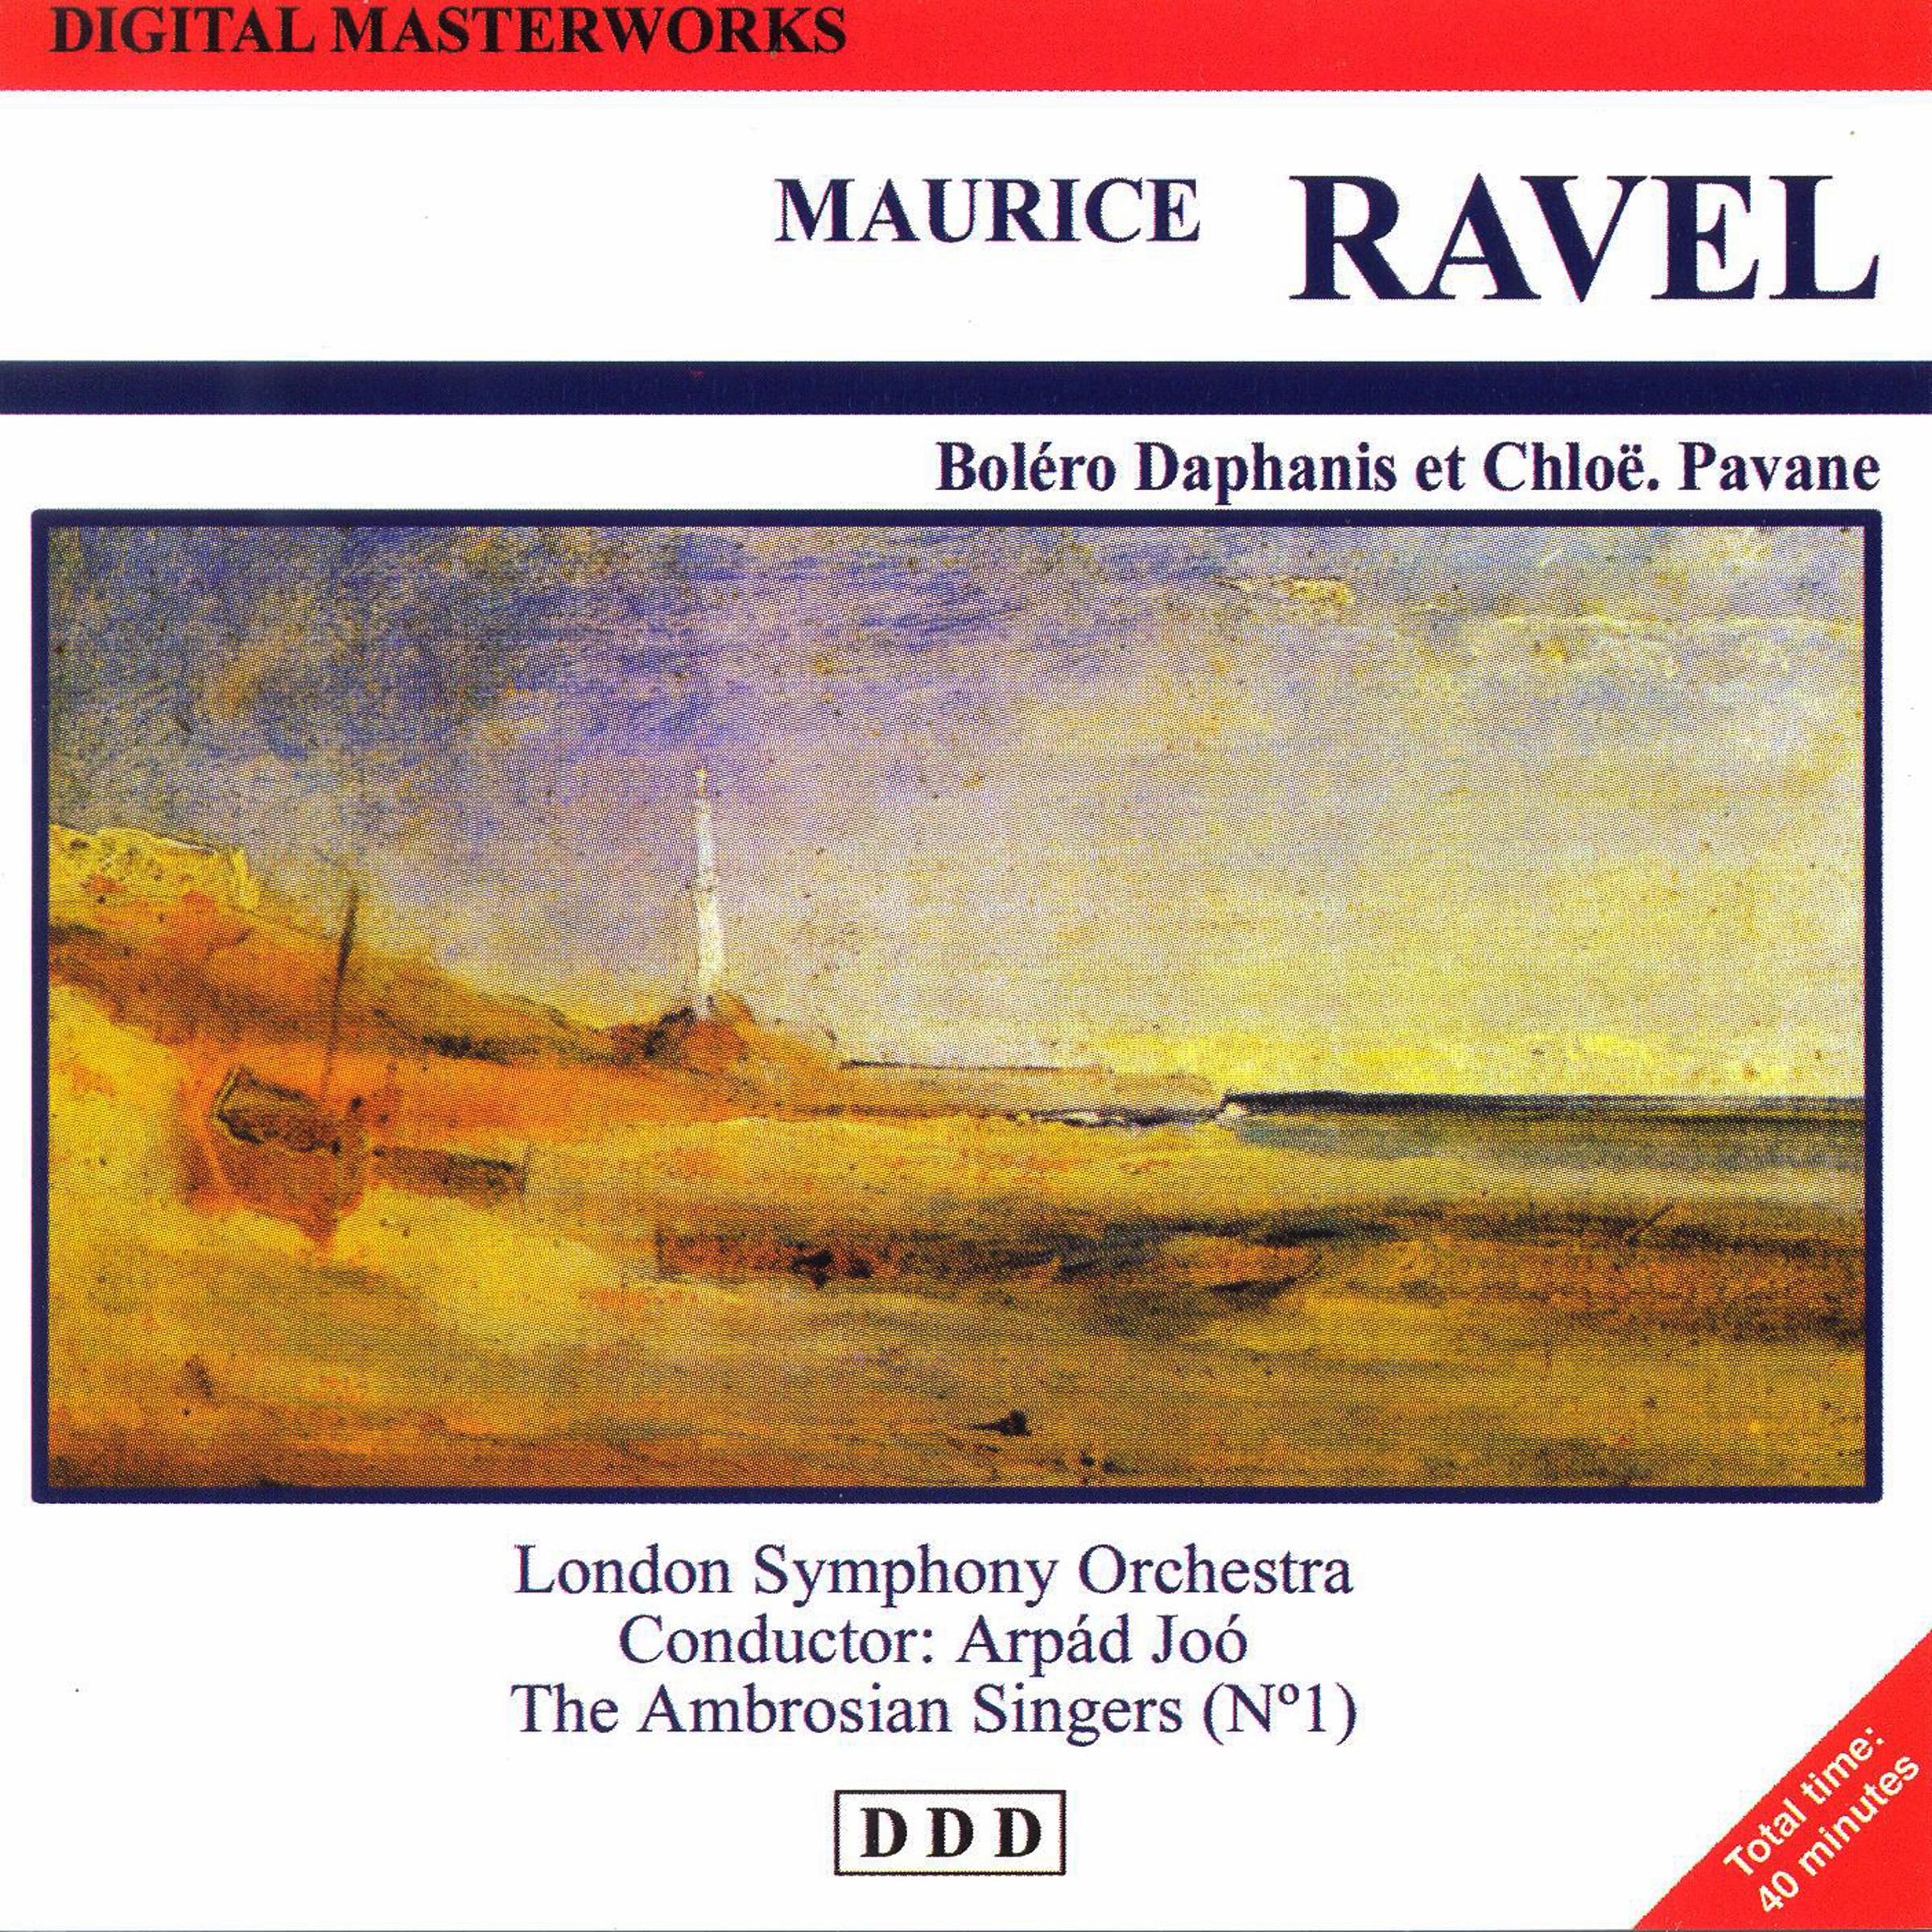 Maurice Ravel: Digital Masterworks. Bolero Daphanis Et Chlo. Pavane